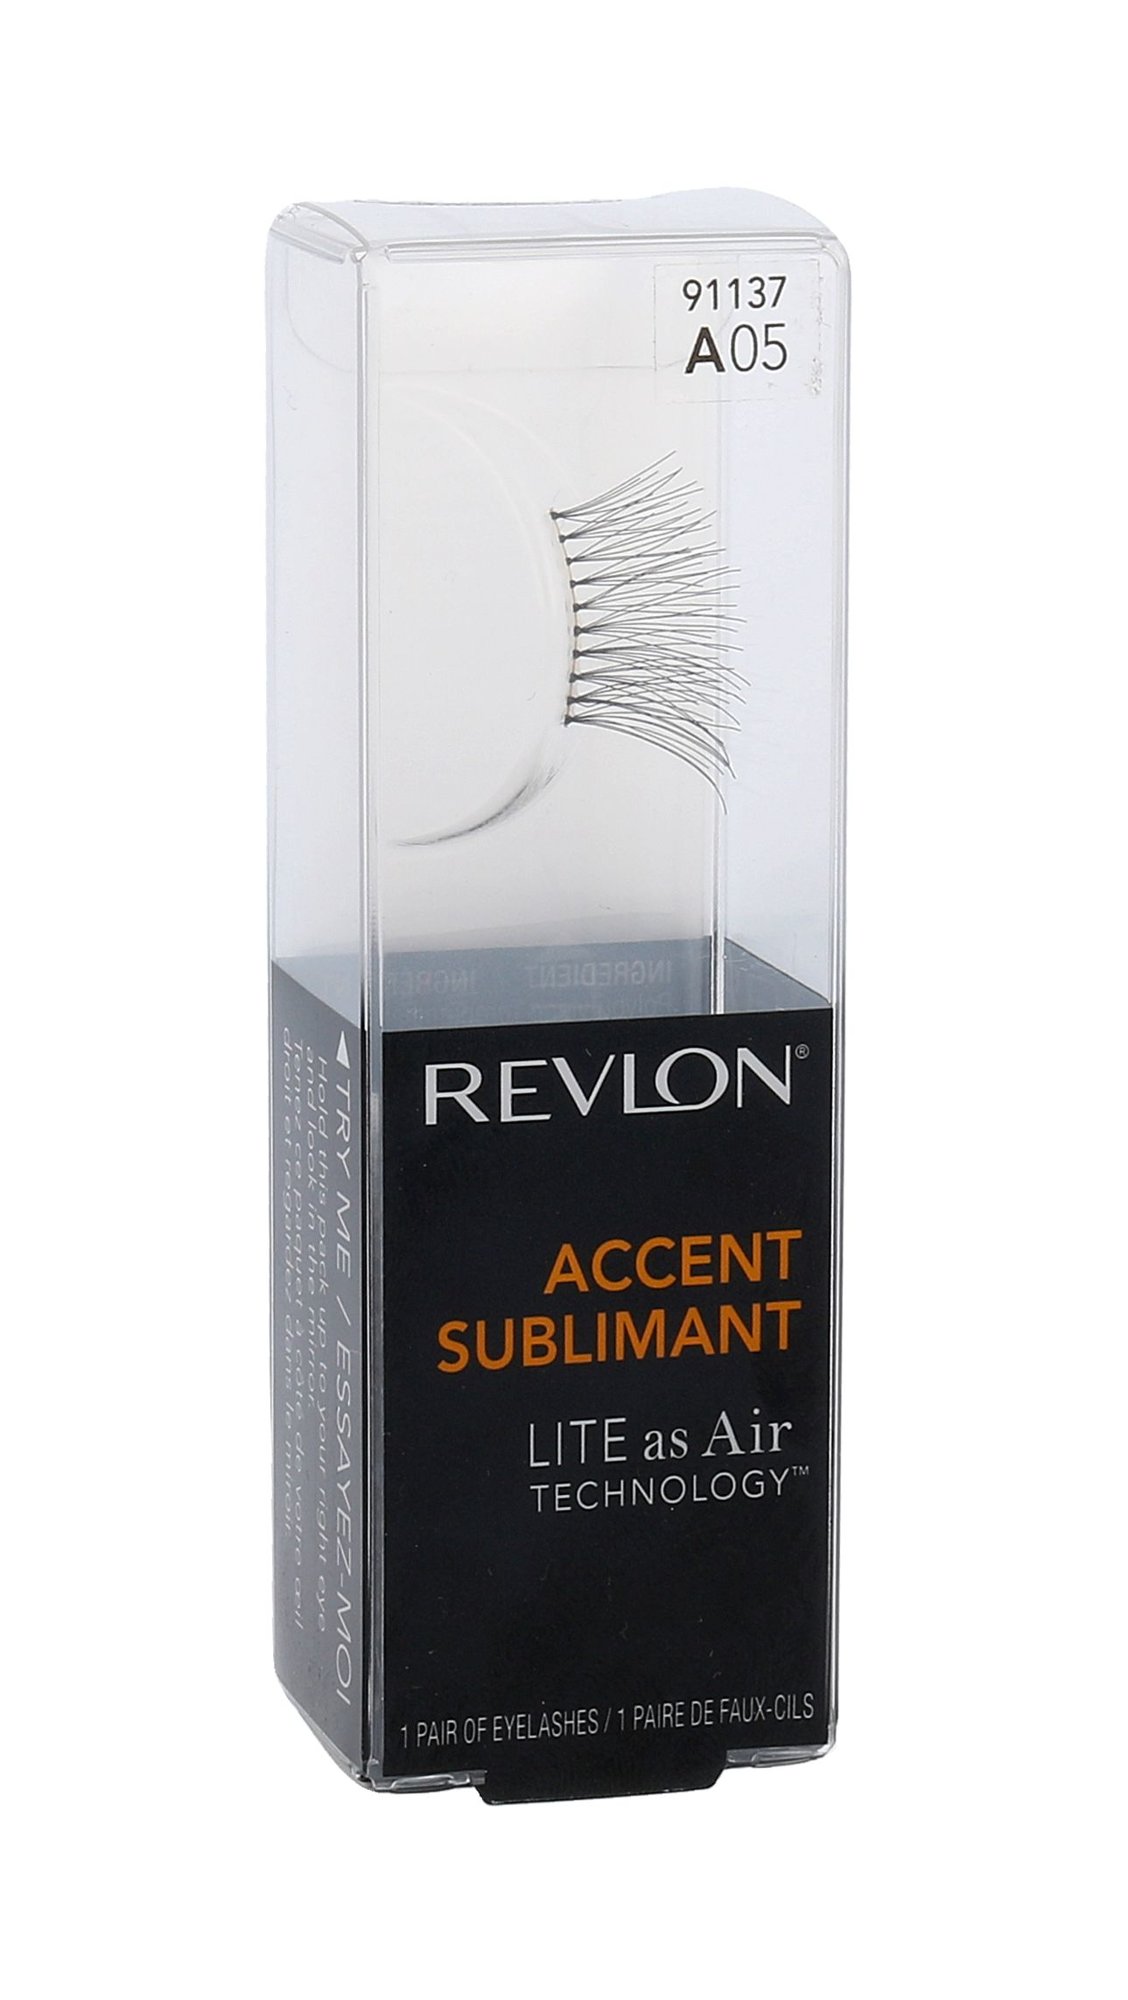 Revlon Accent Lite As Air Technology A05